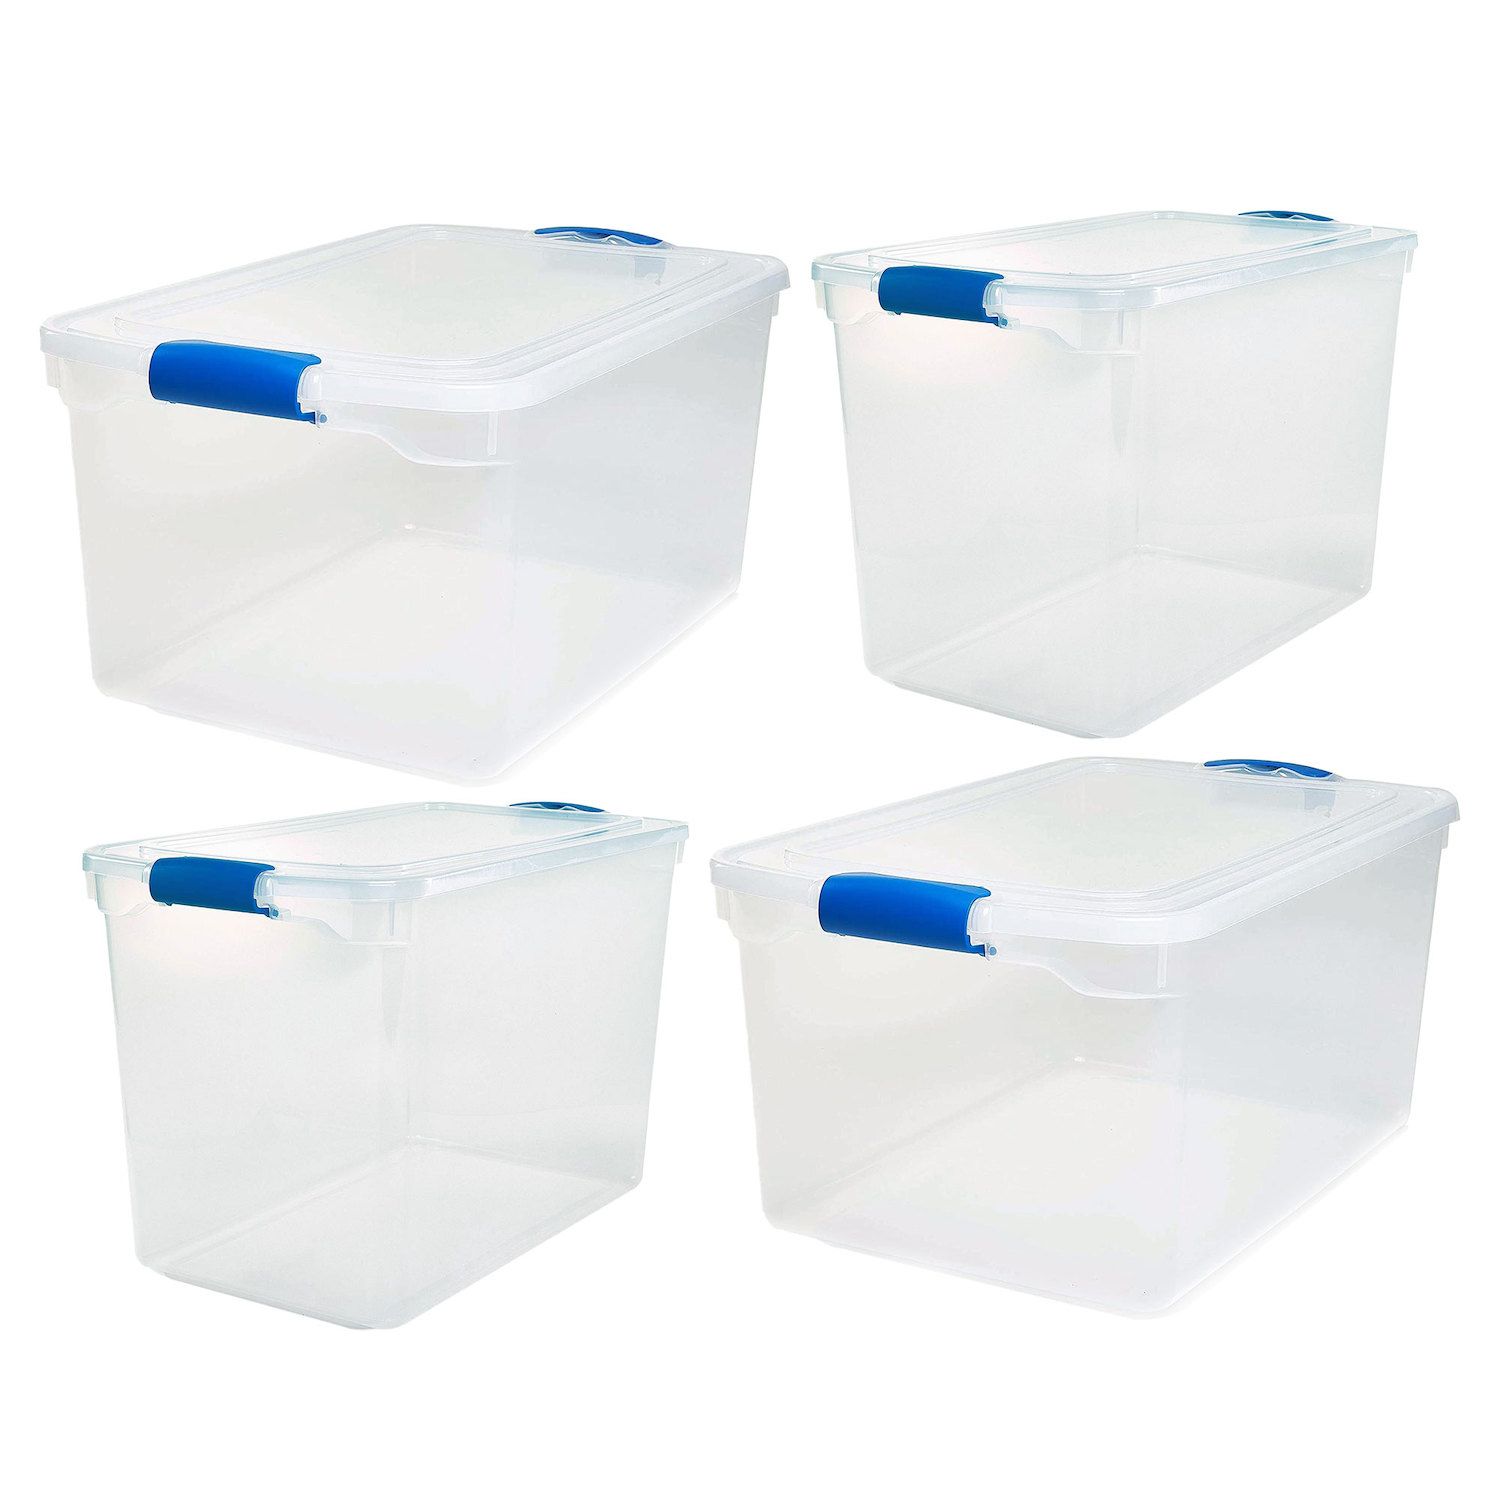 Homz 28 Qt Snaplock Clear Plastic Storage Container Bin with